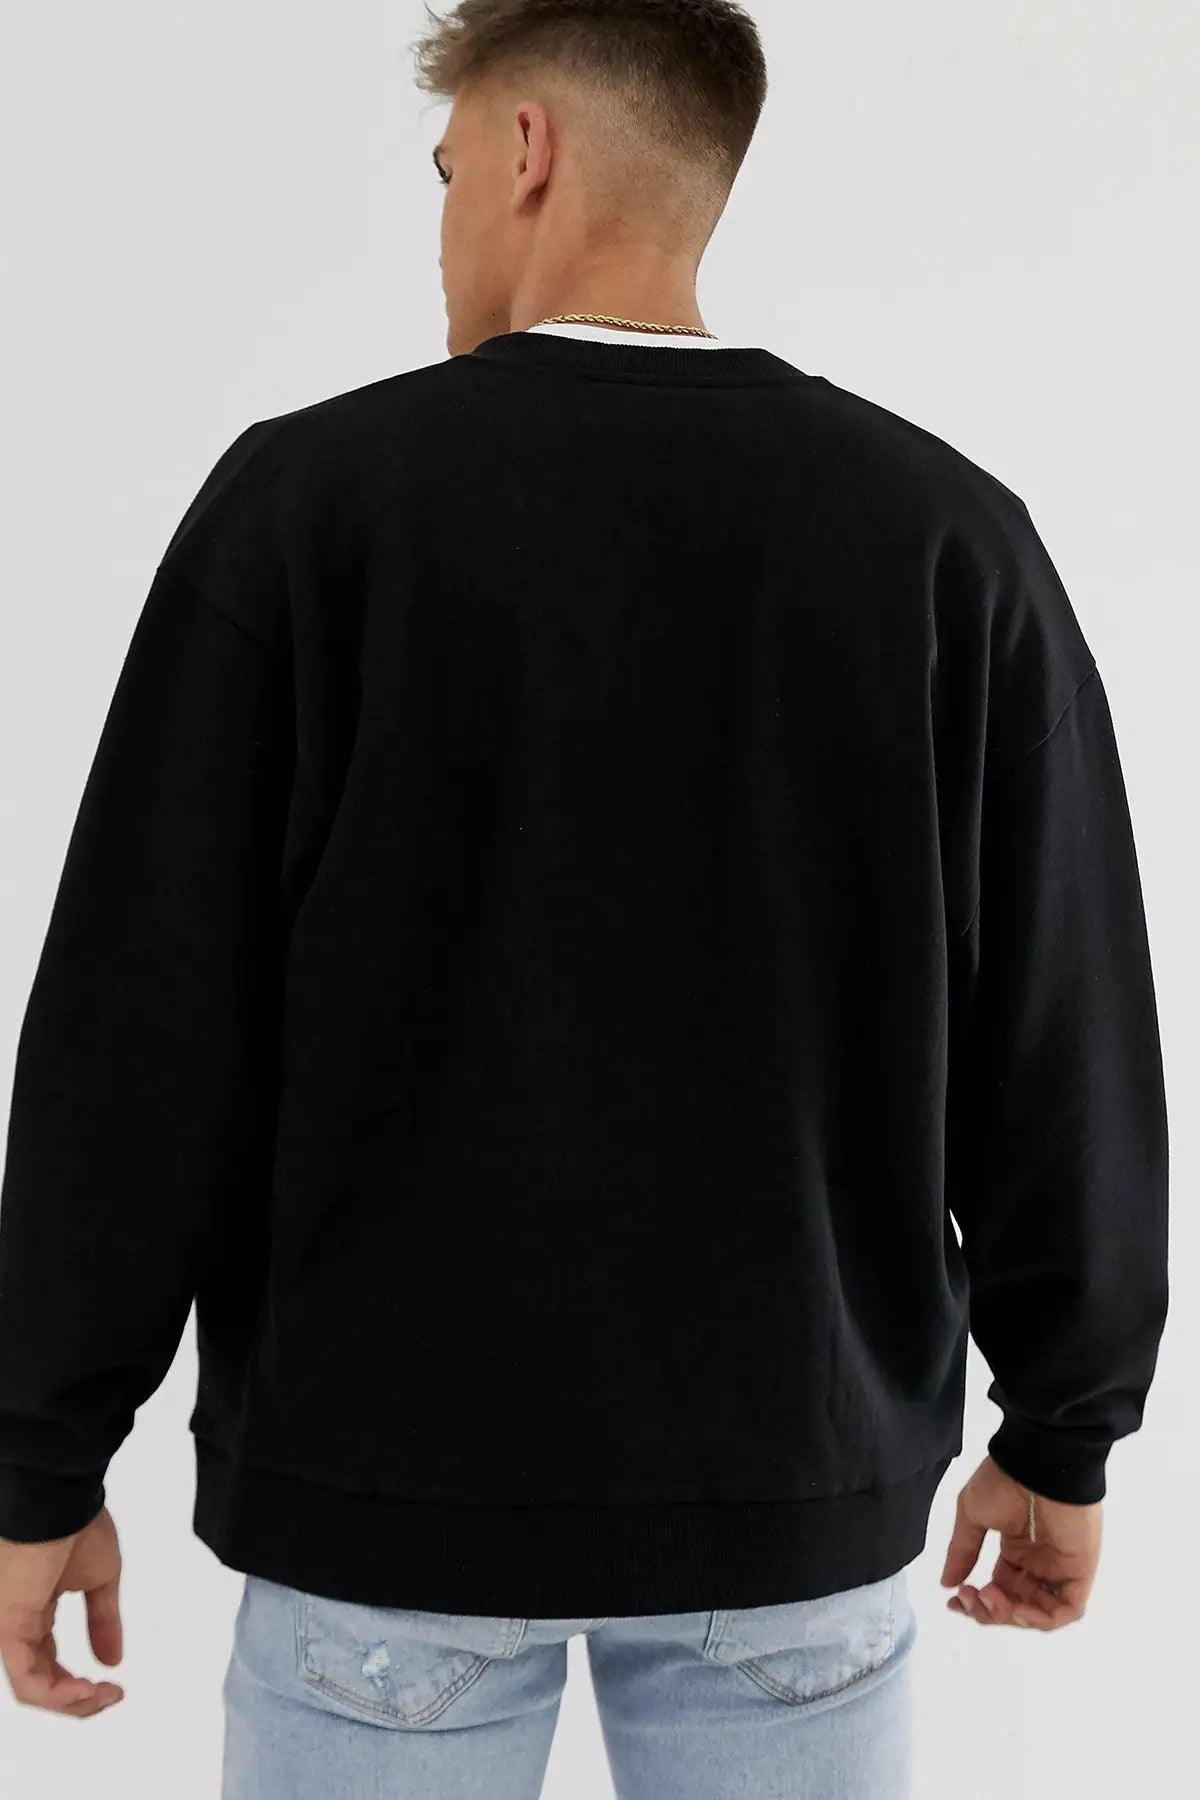 The End Oversize Erkek Sweatshirt - PΛSΛGE